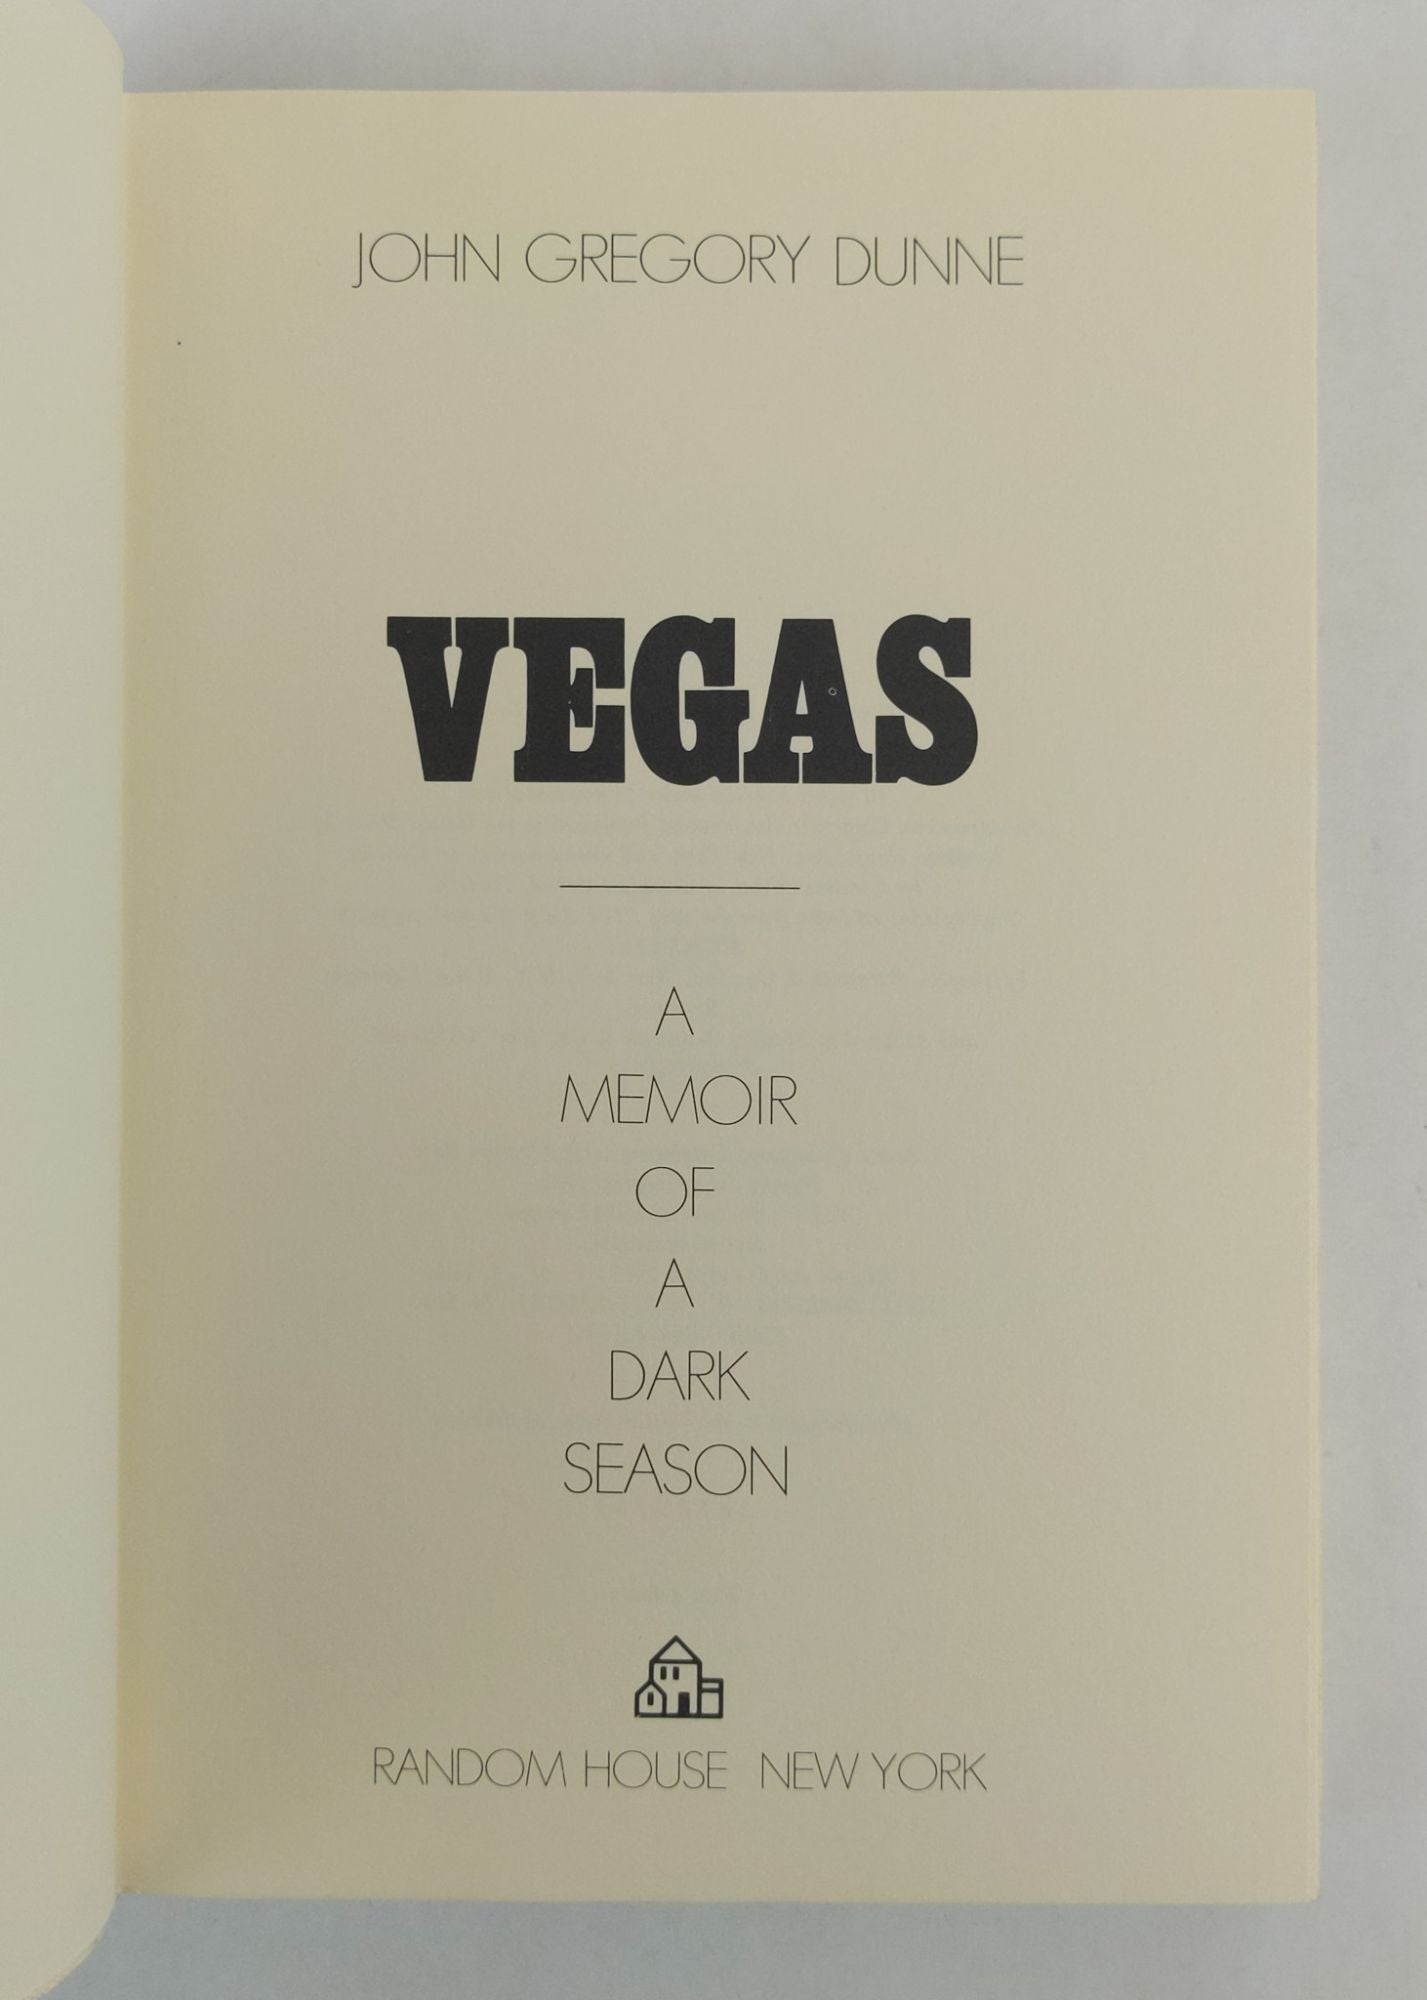 Product Image for VEGAS: A MEMOIR OF A DARK SEASON [signed]